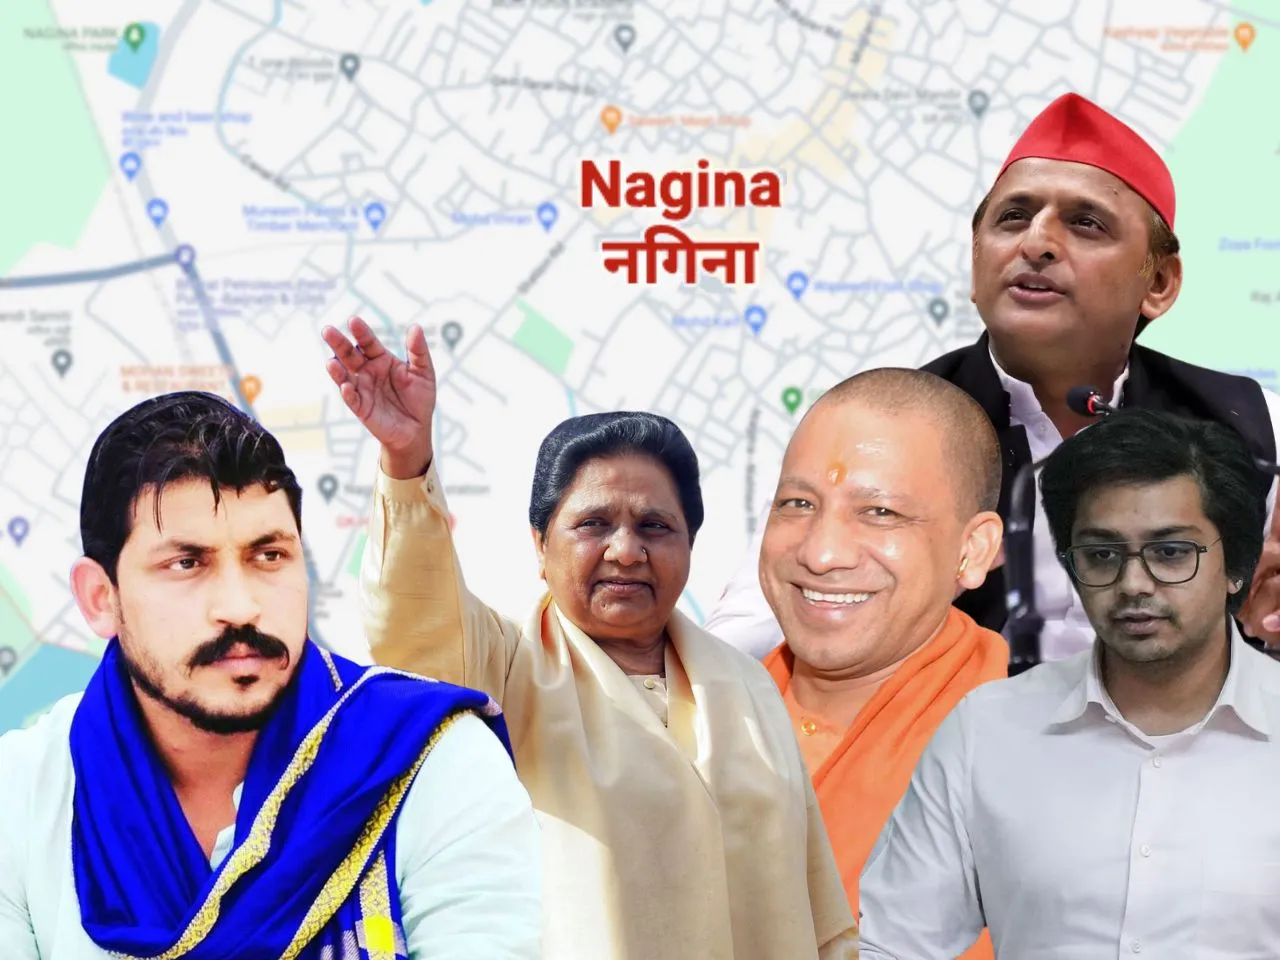 Nagina constituency 